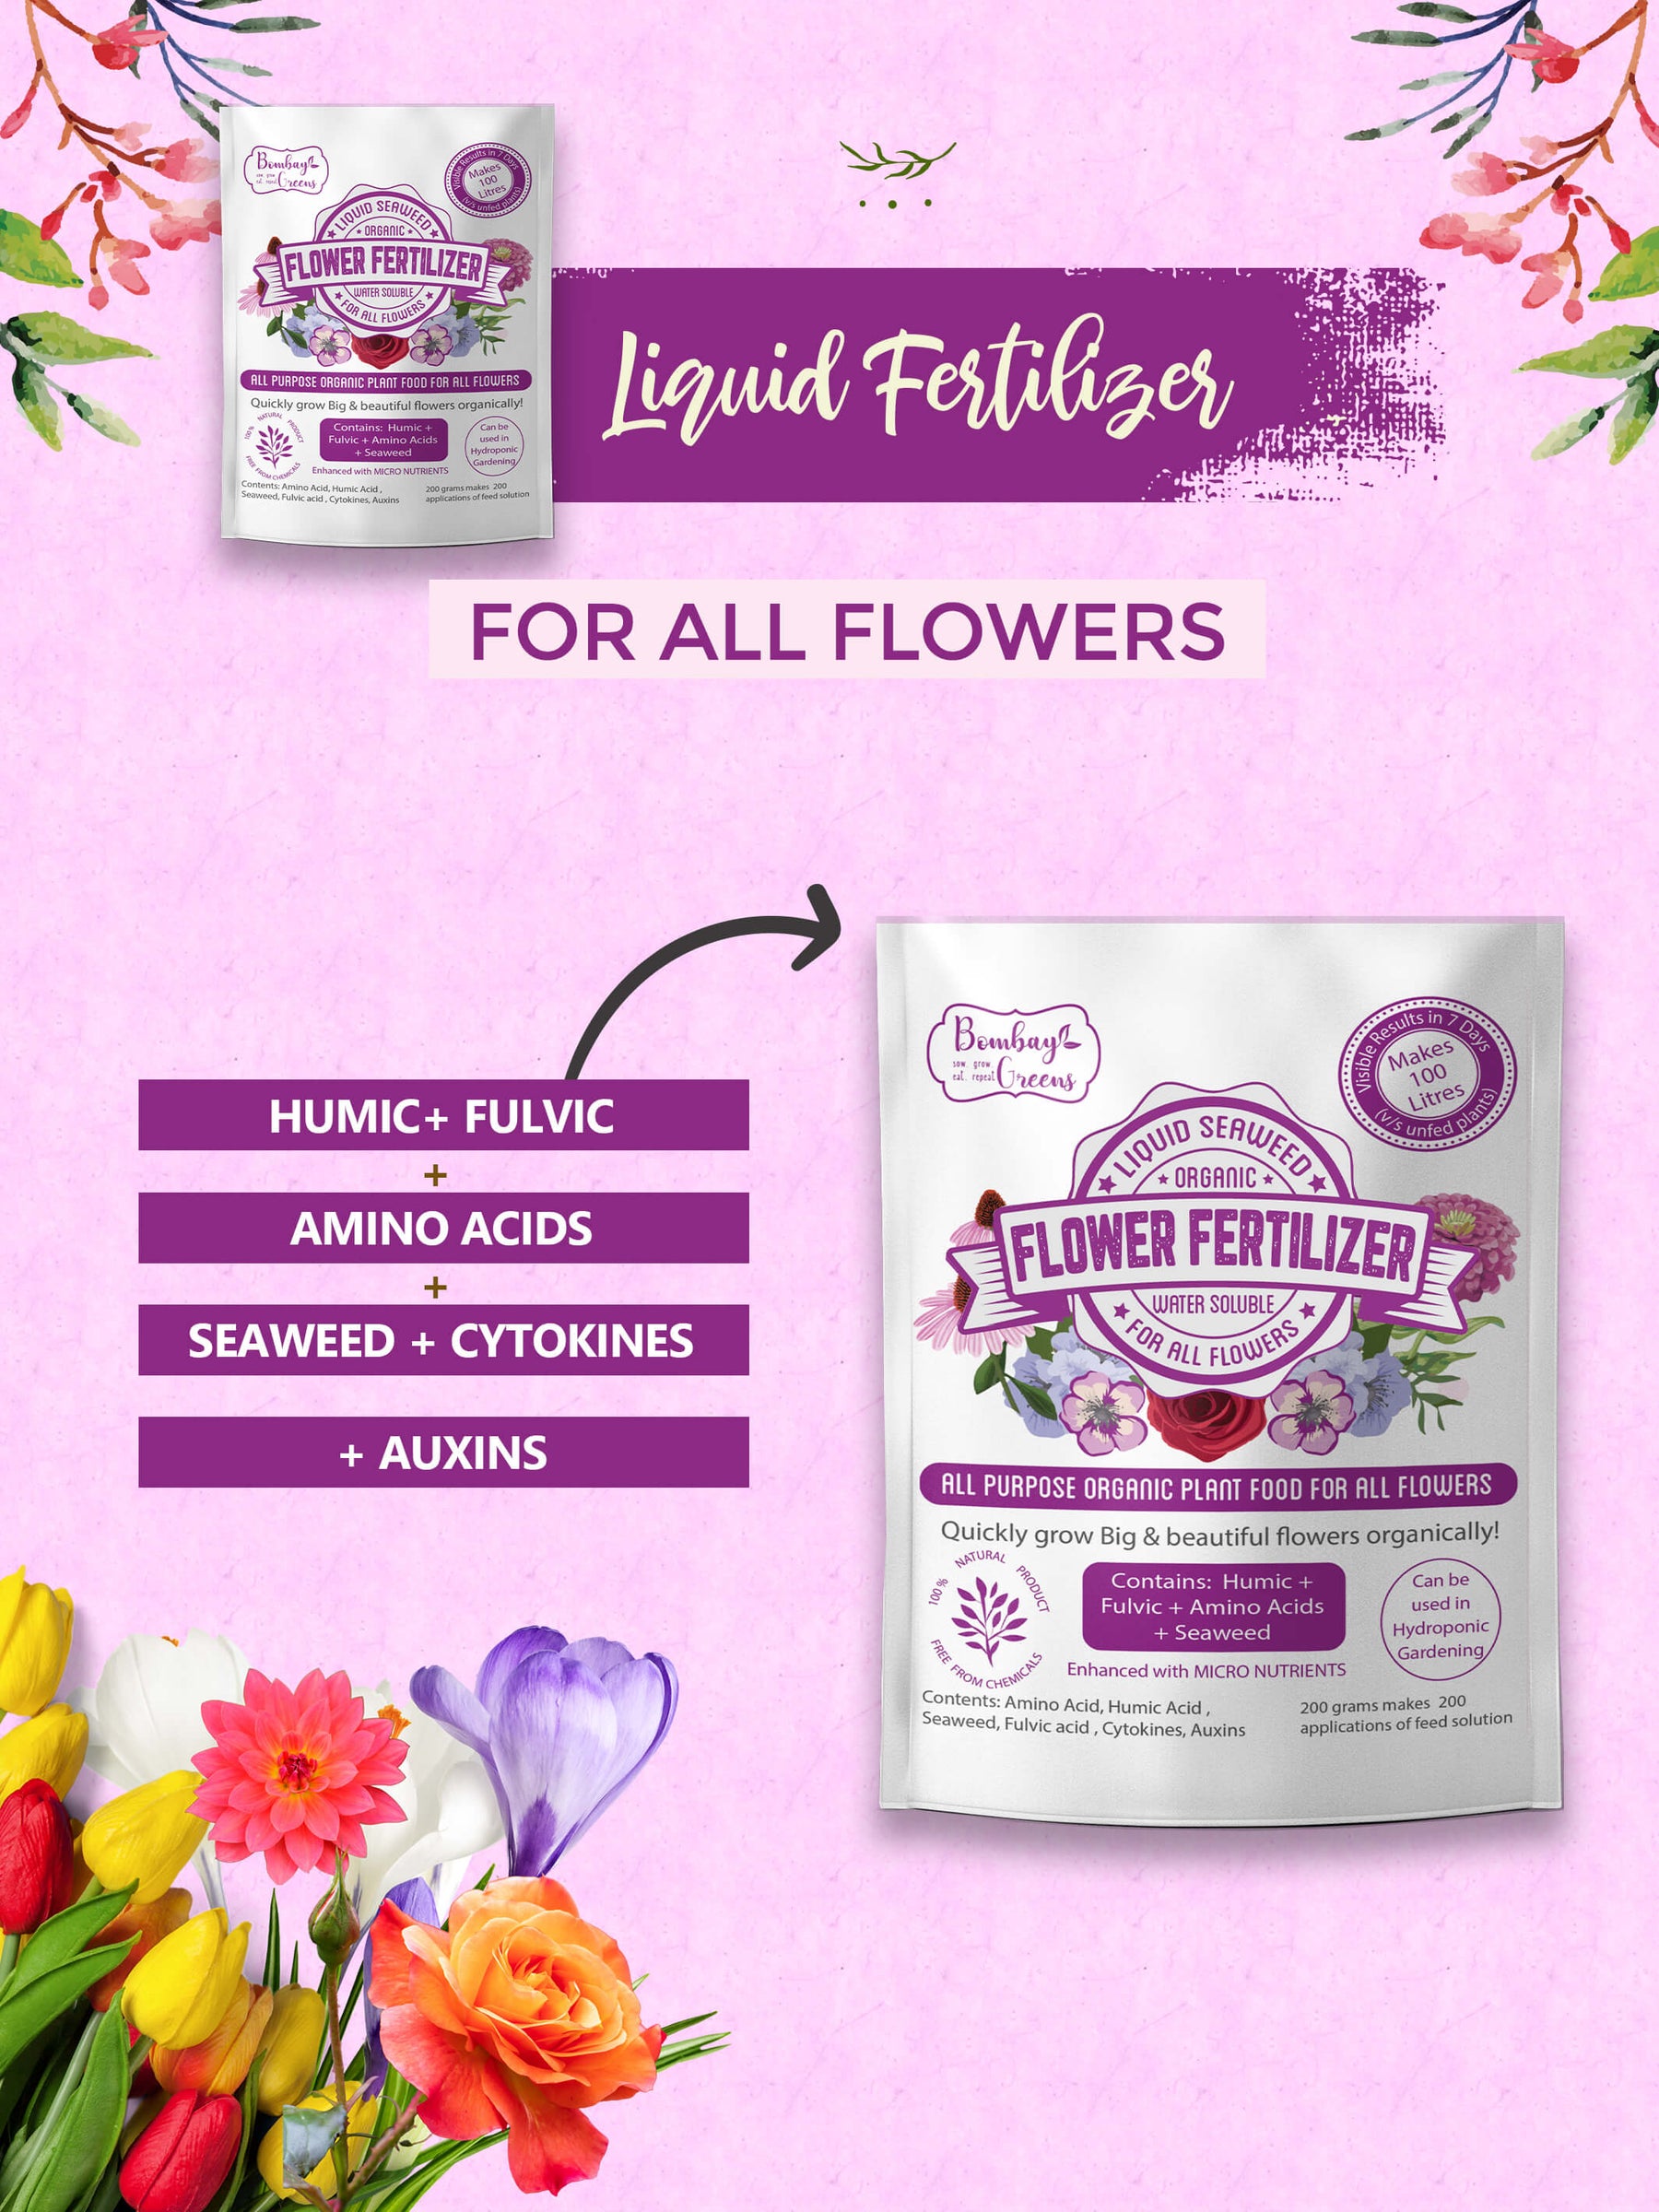 Liquid Fertiliser for all flowers - Composition